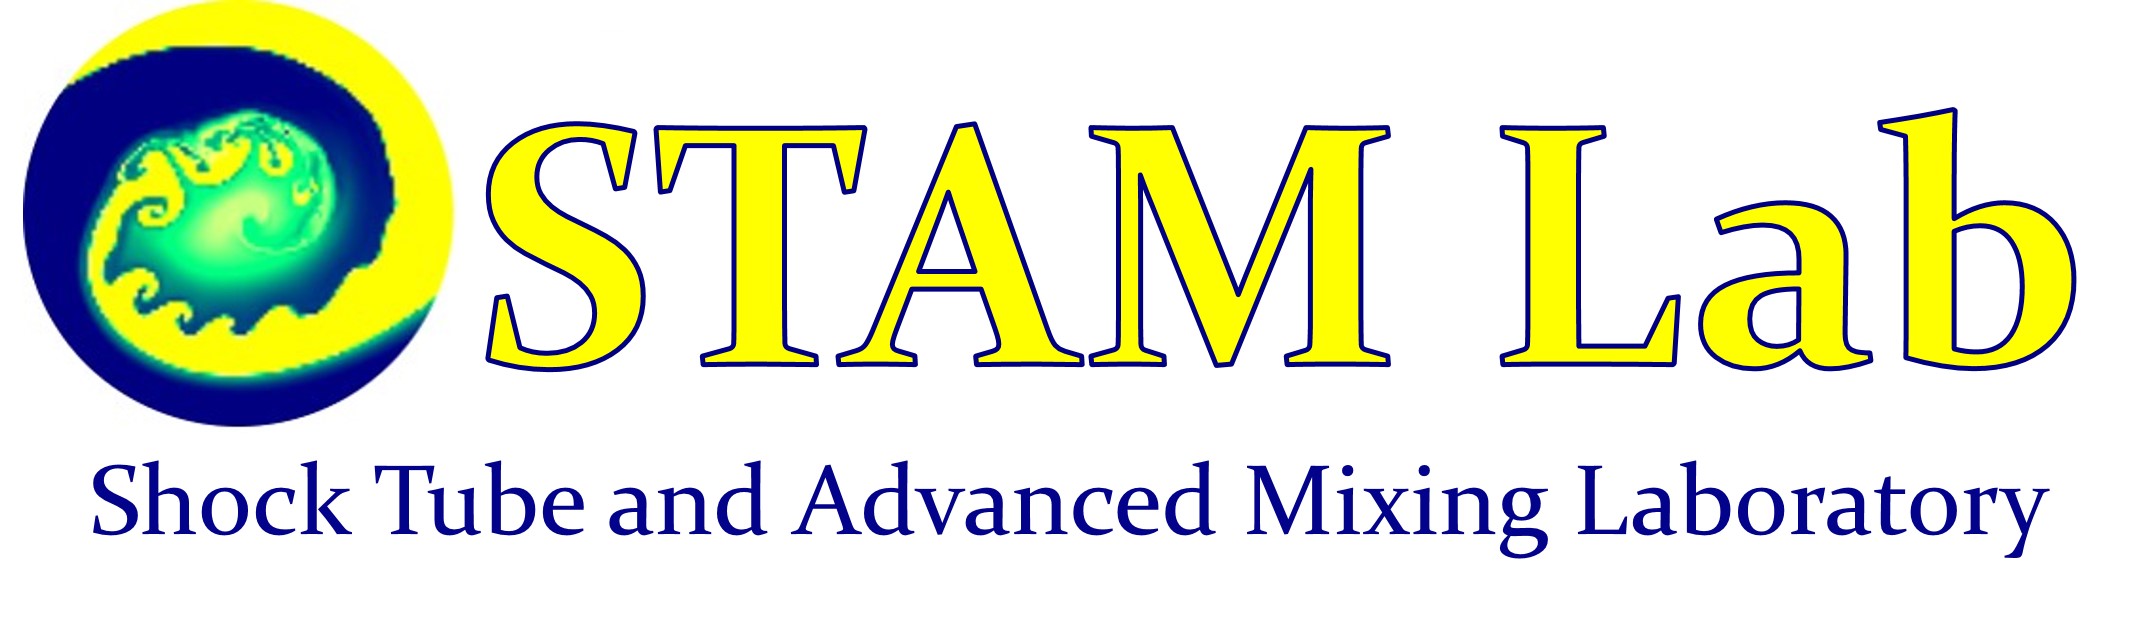 STAM Lab logo